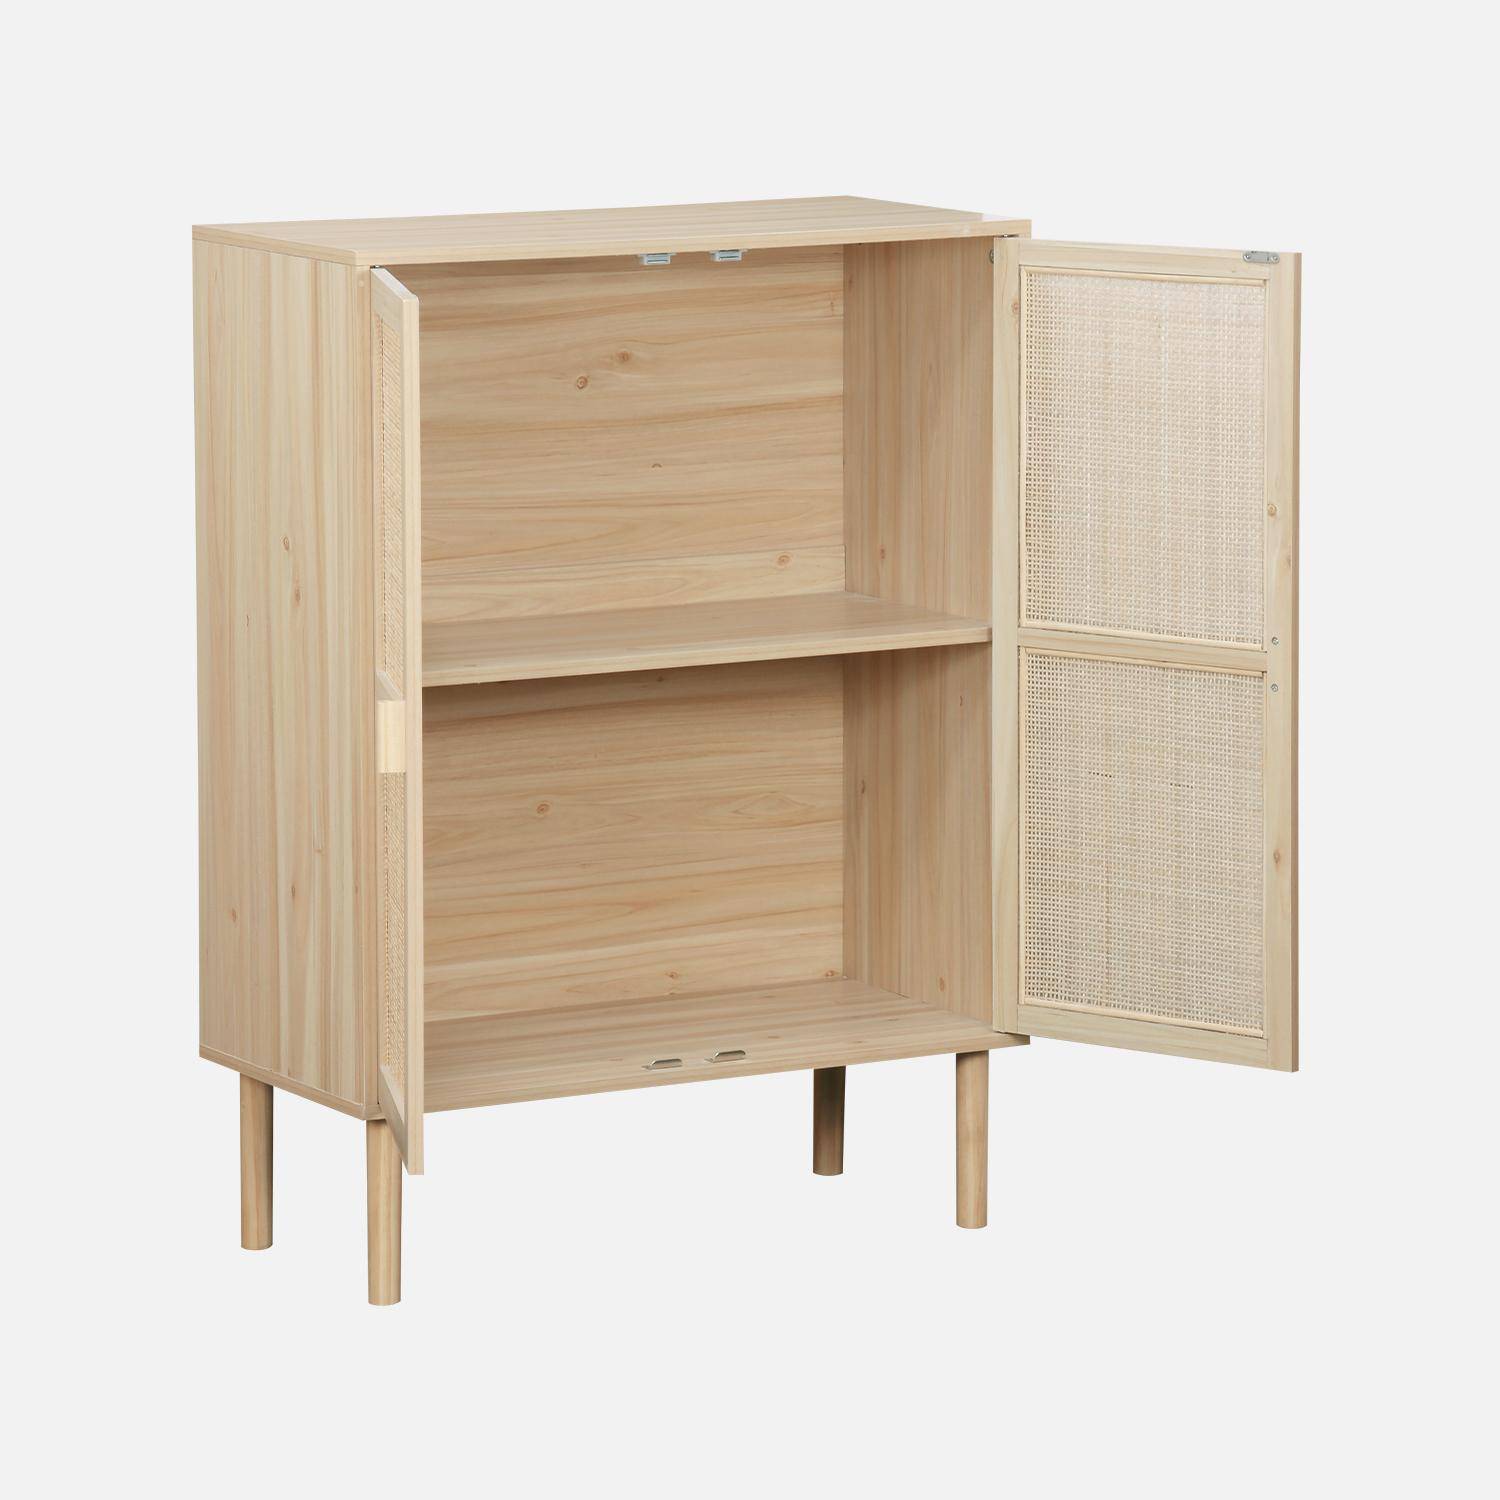 Wood and woven rattan 2-door storage cabinet, 80x40x110cm, Camargue, 2 doors, 2 shelves, Natural,sweeek,Photo6